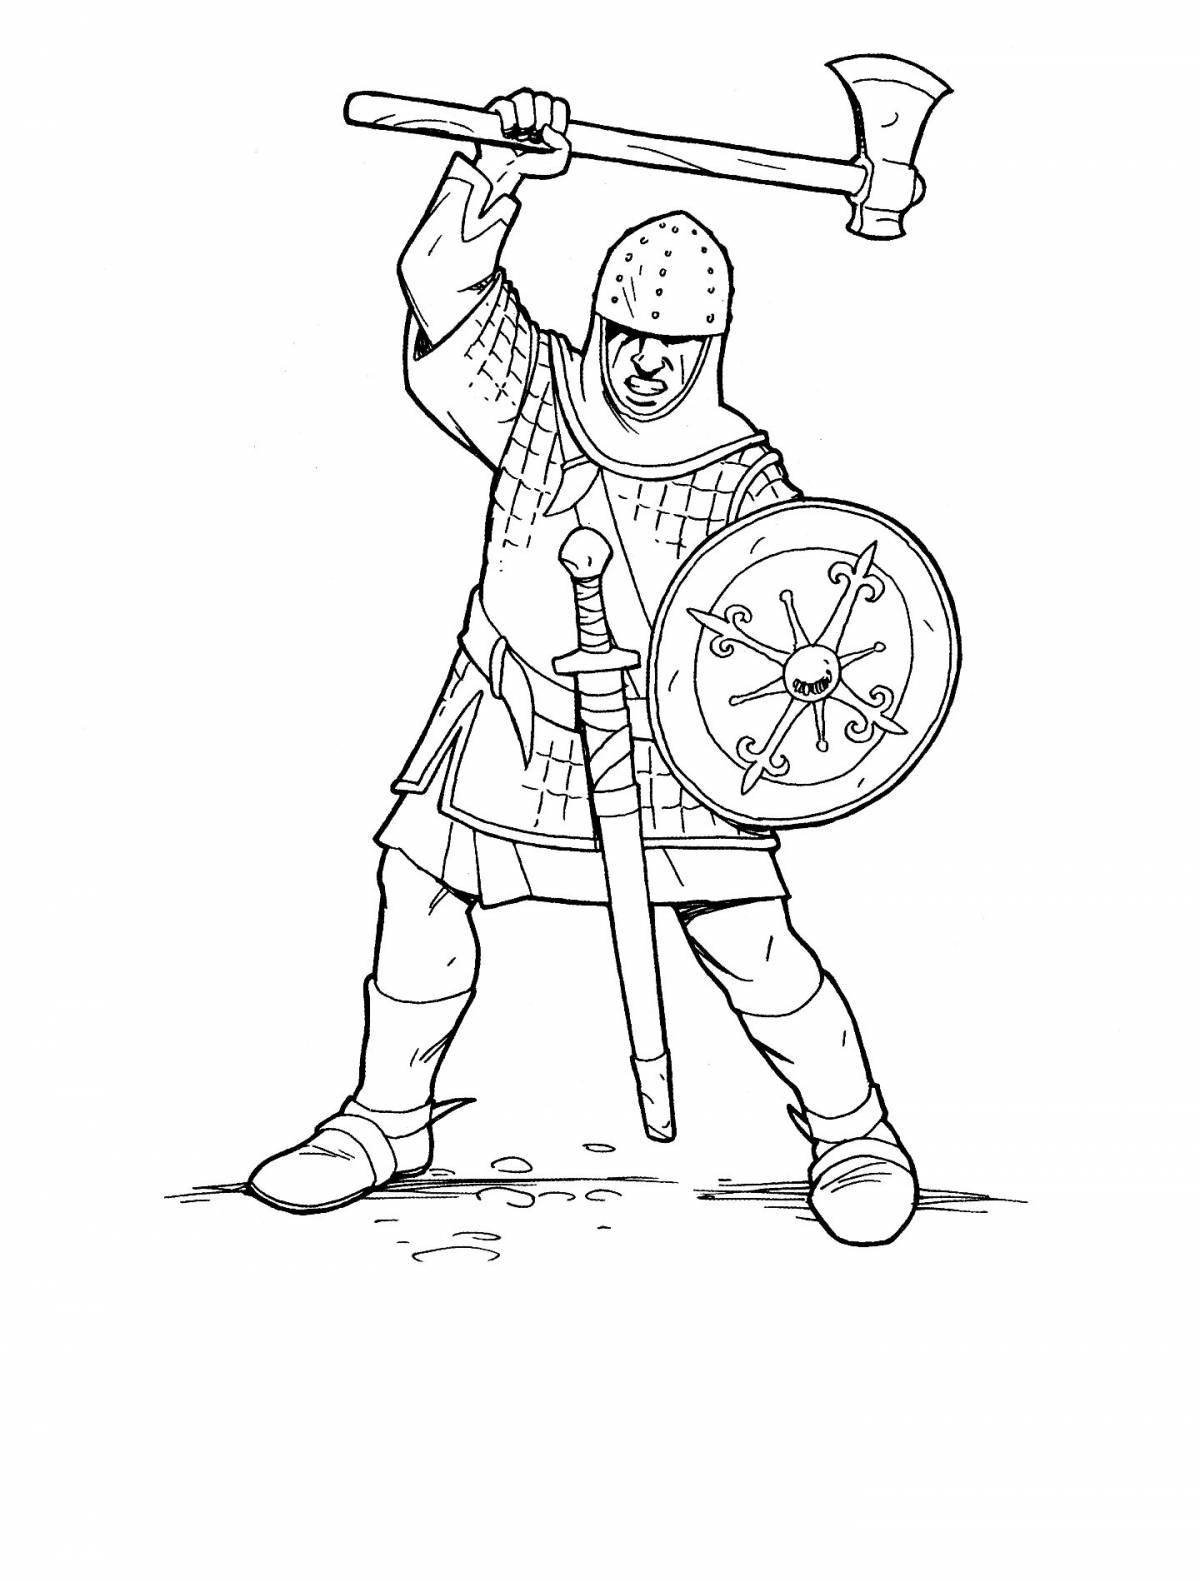 Heroic crusaders coloring pages